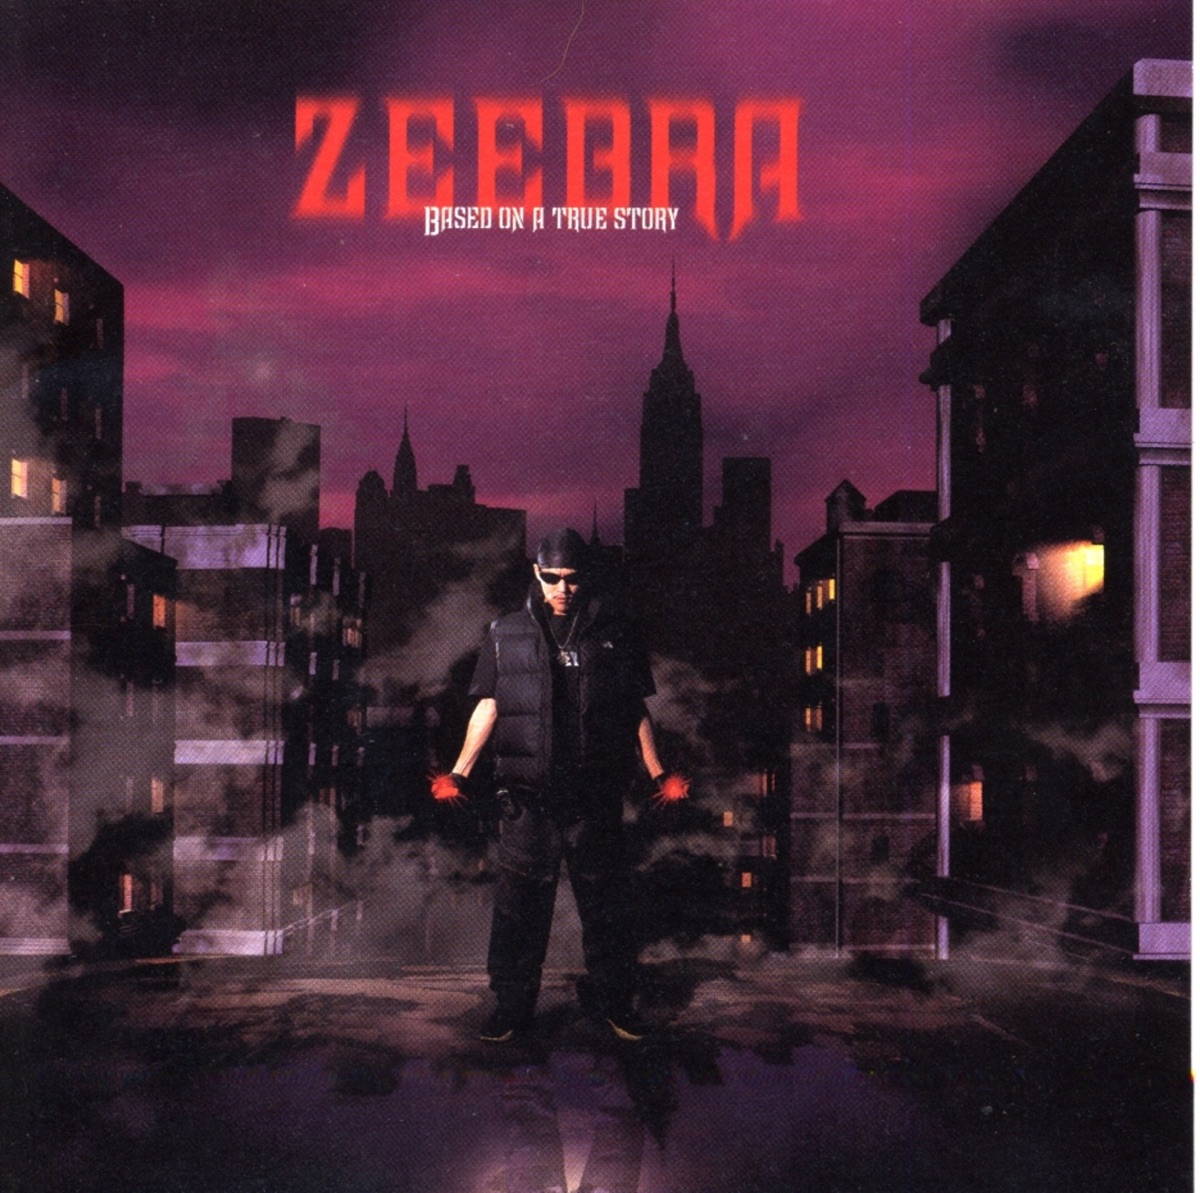 TOKYO'S FINEST - Album by Zeebra - Apple Music